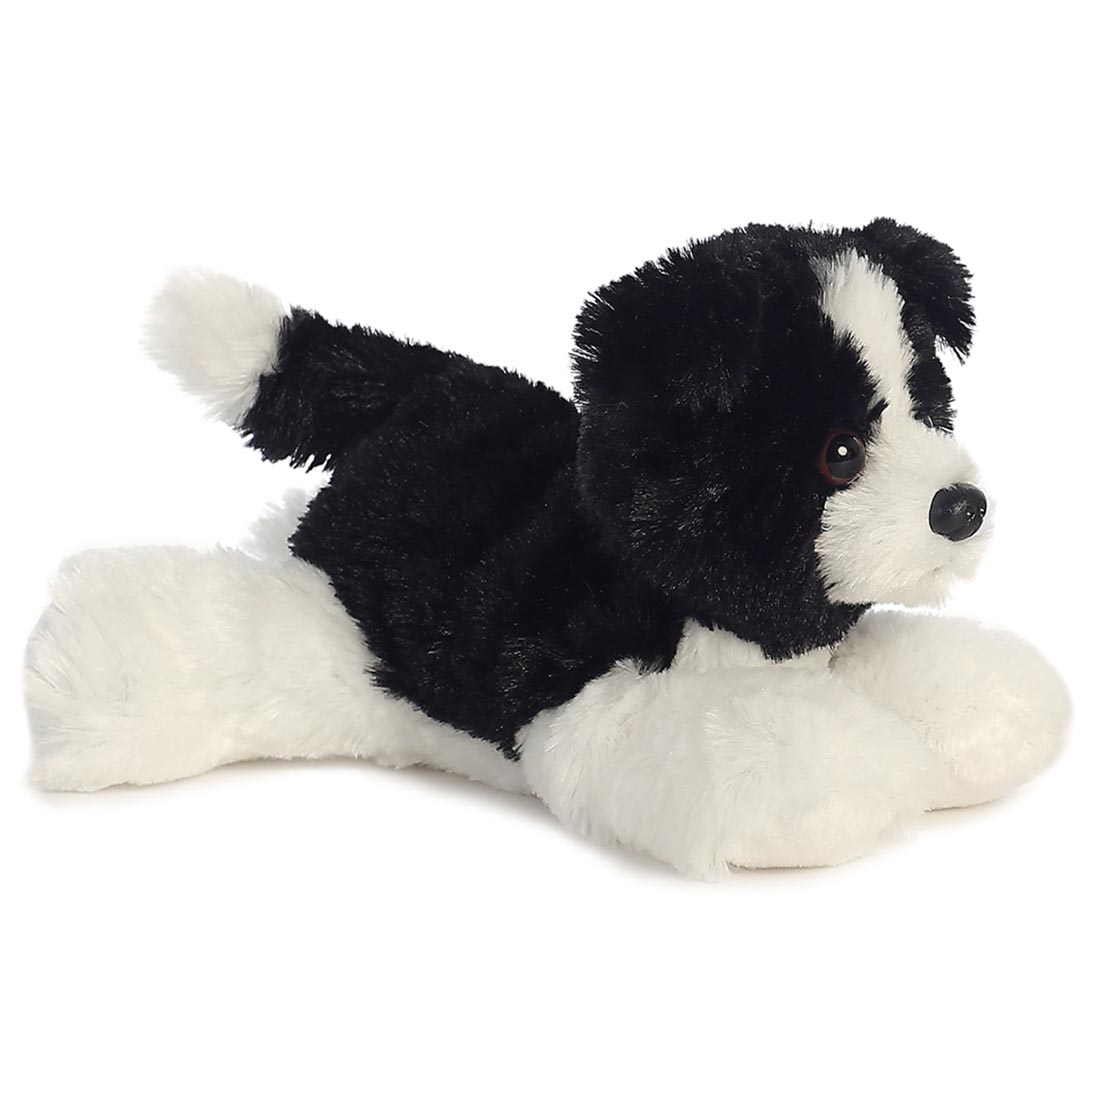 border collie dog stuffed animal